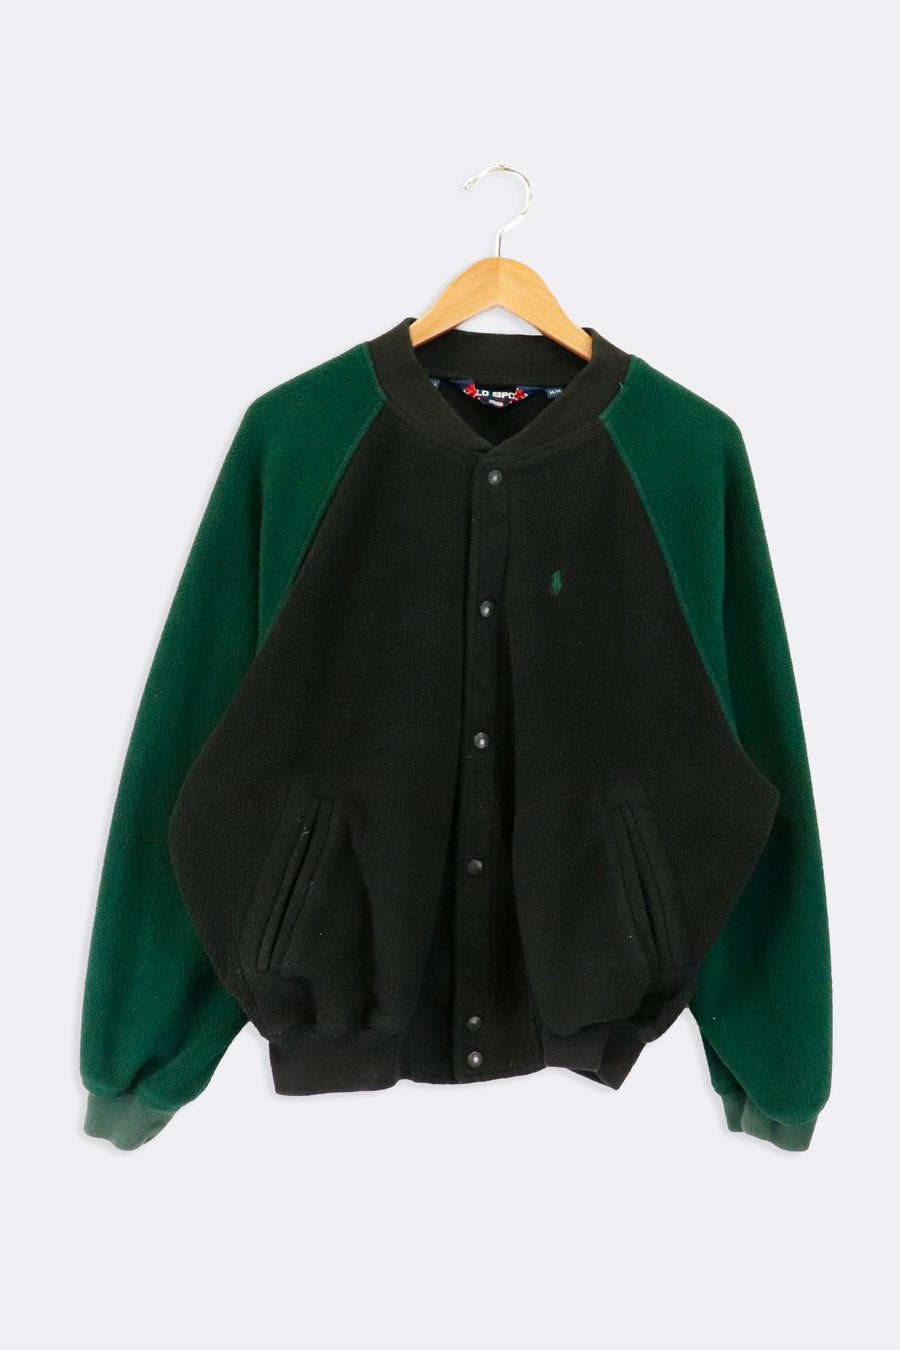 Vintage Polo Sport Ralph Lauren Fleece Button Up Jacket Sweater Sz M